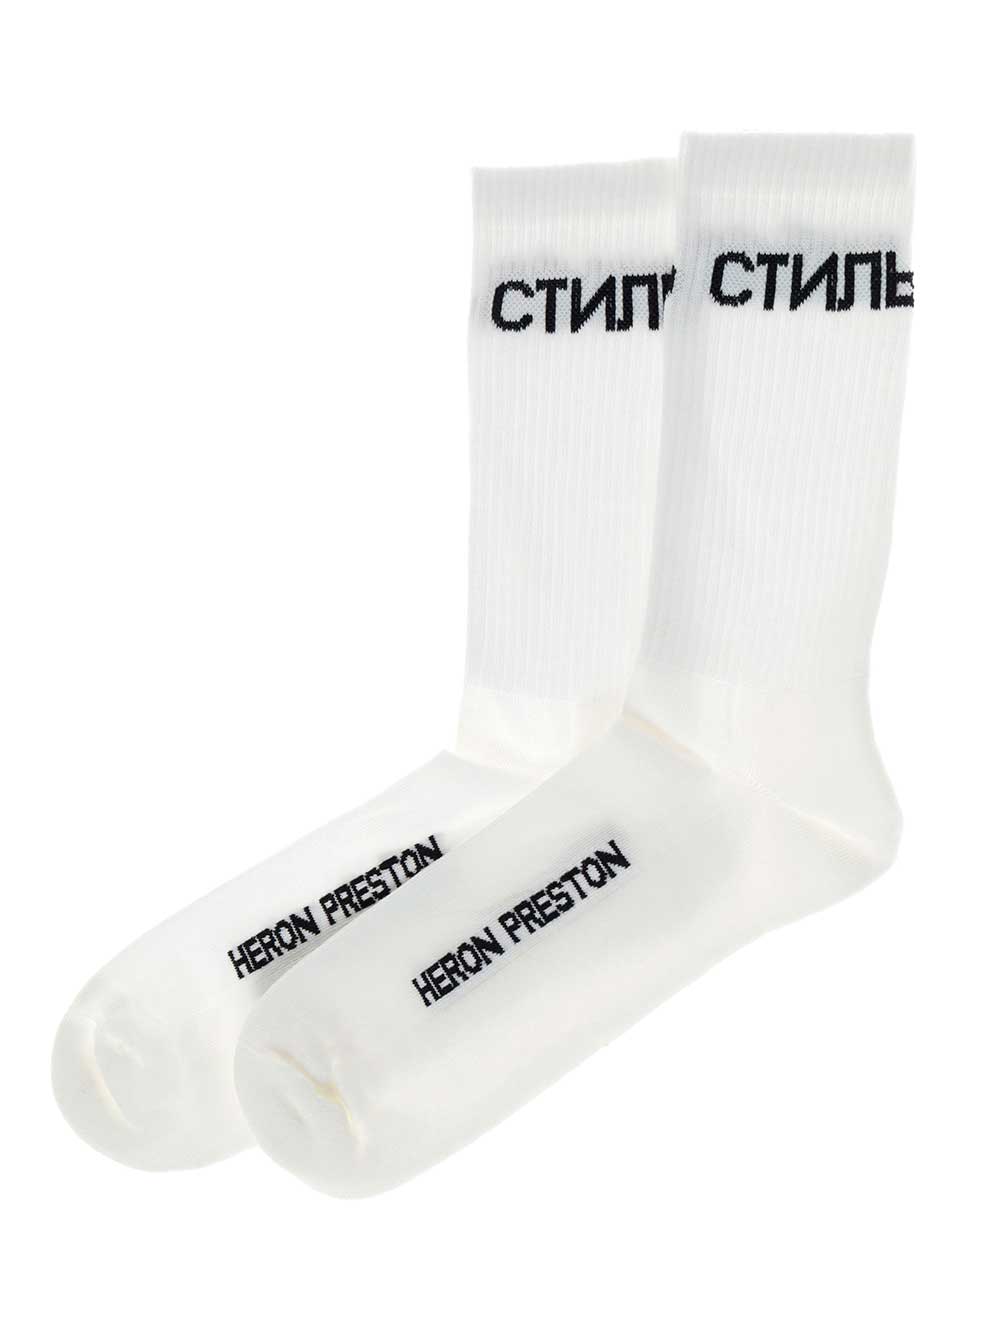 White Cotton Socks With Ctnmb Print